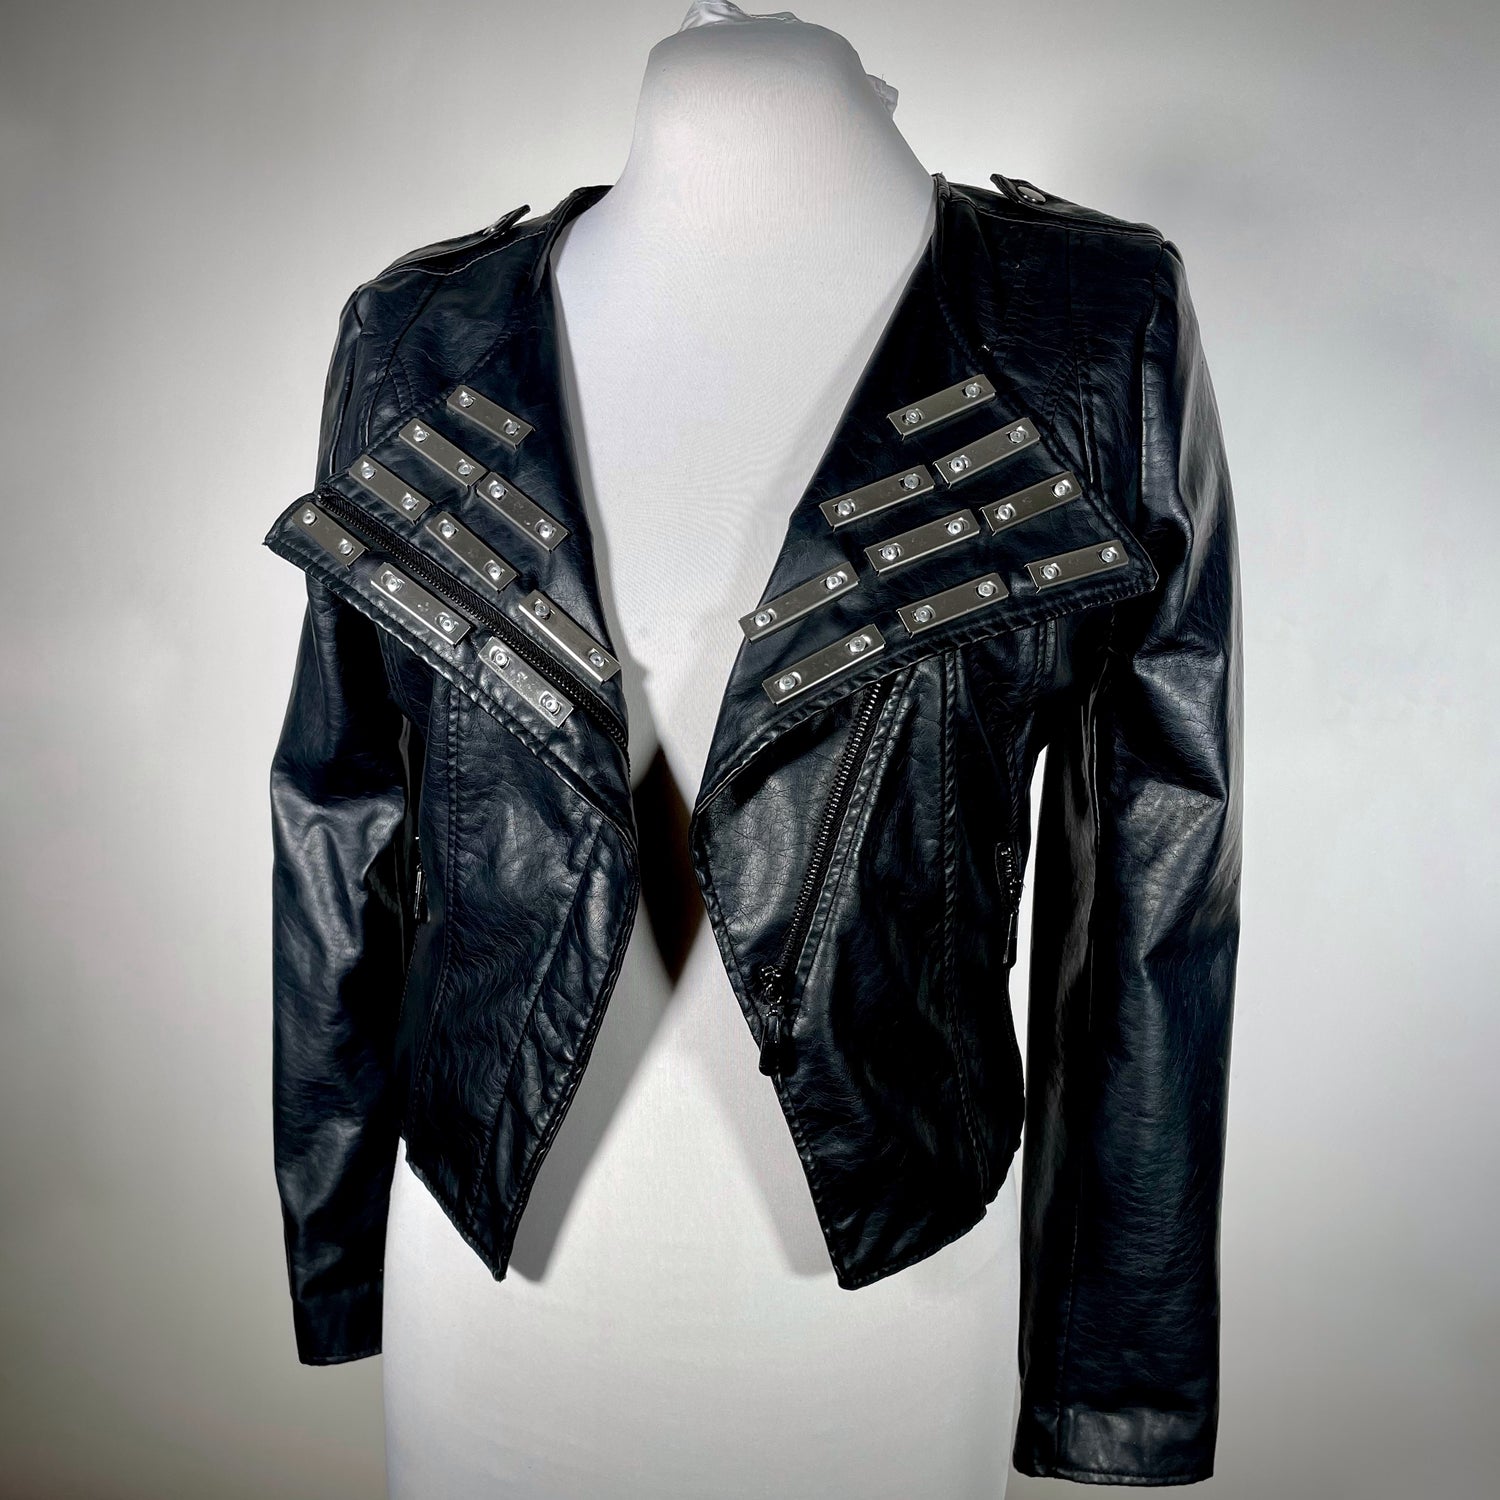 Black pleather moto jacket with metal hardware goth punk tradgoth cyberpunk industrial 